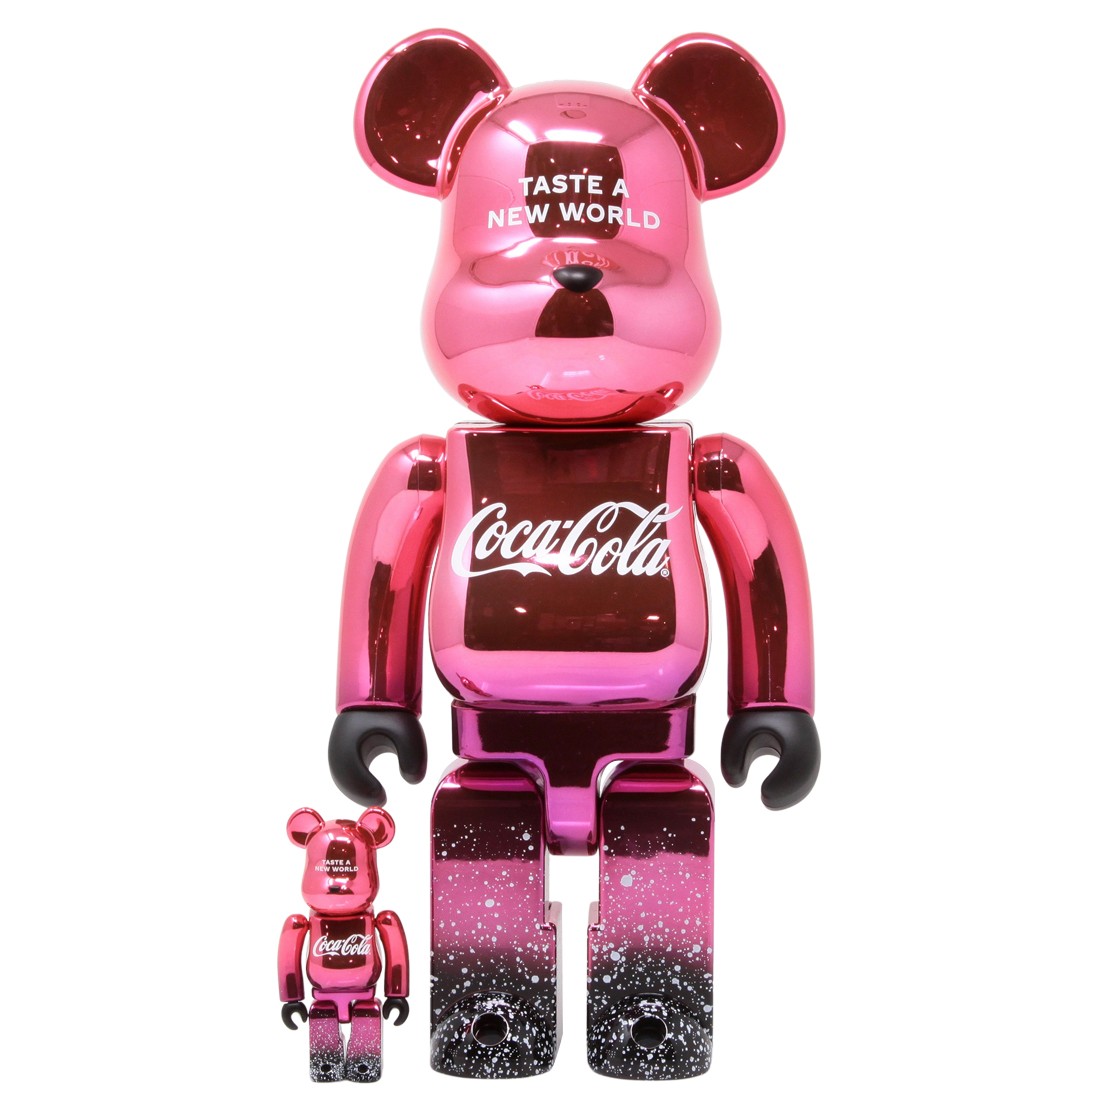 Medicom Coca-Cola Creations 100% 400% Bearbrick Figure Set red